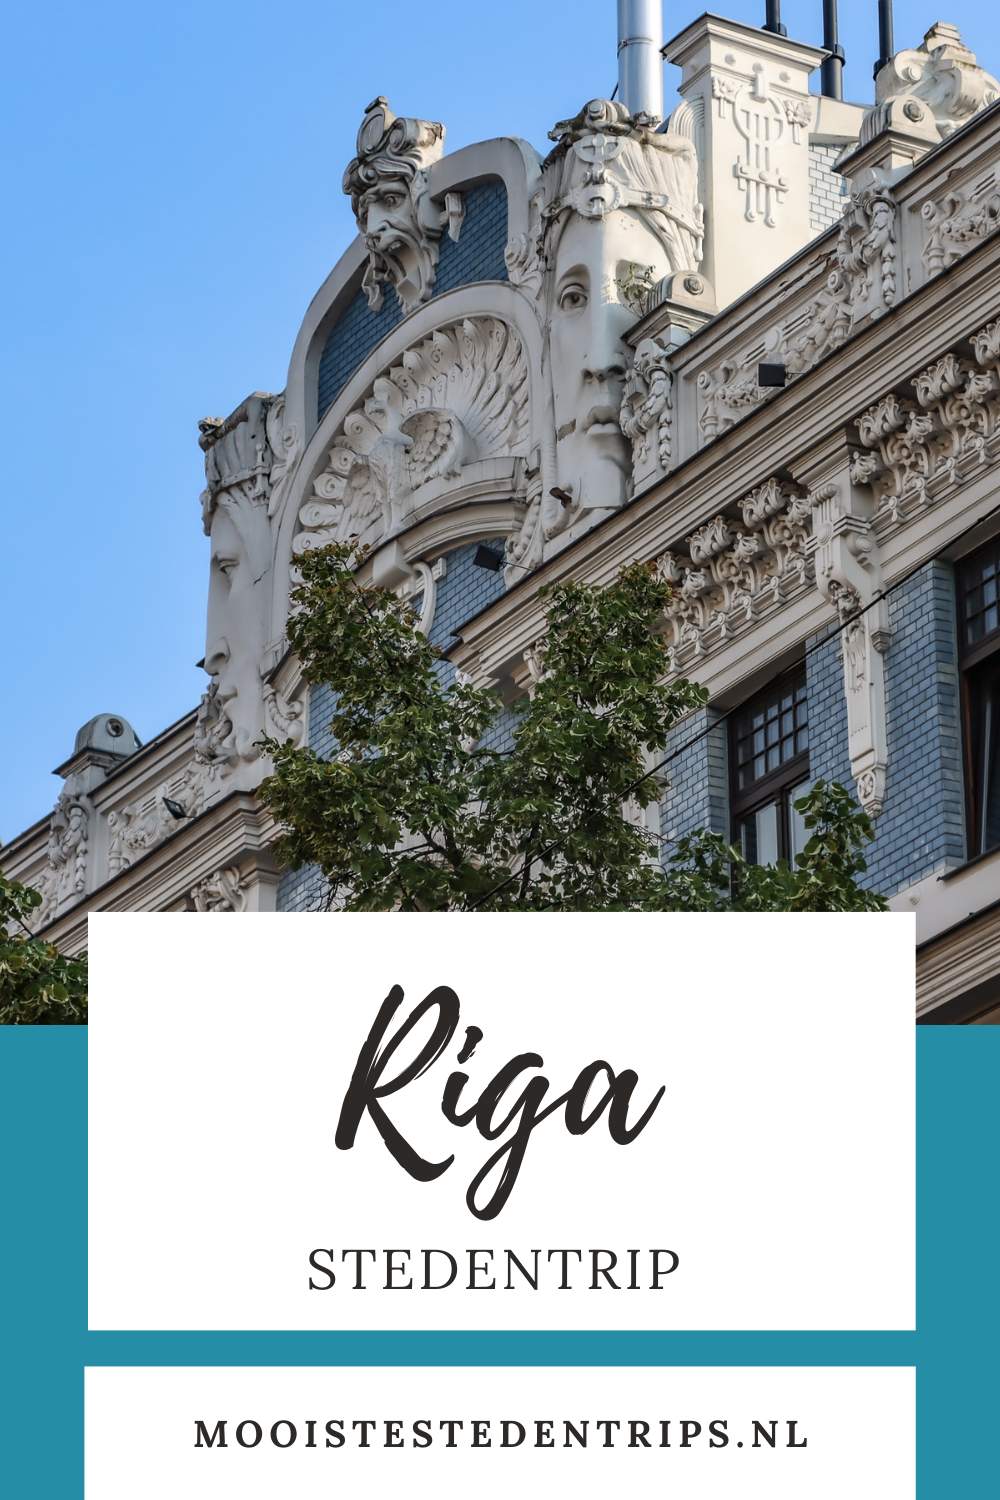 Stedentrip Riga: bekijk alle handige en leuke tips voor een stedentrip Riga | Mooistestedentrips.nl